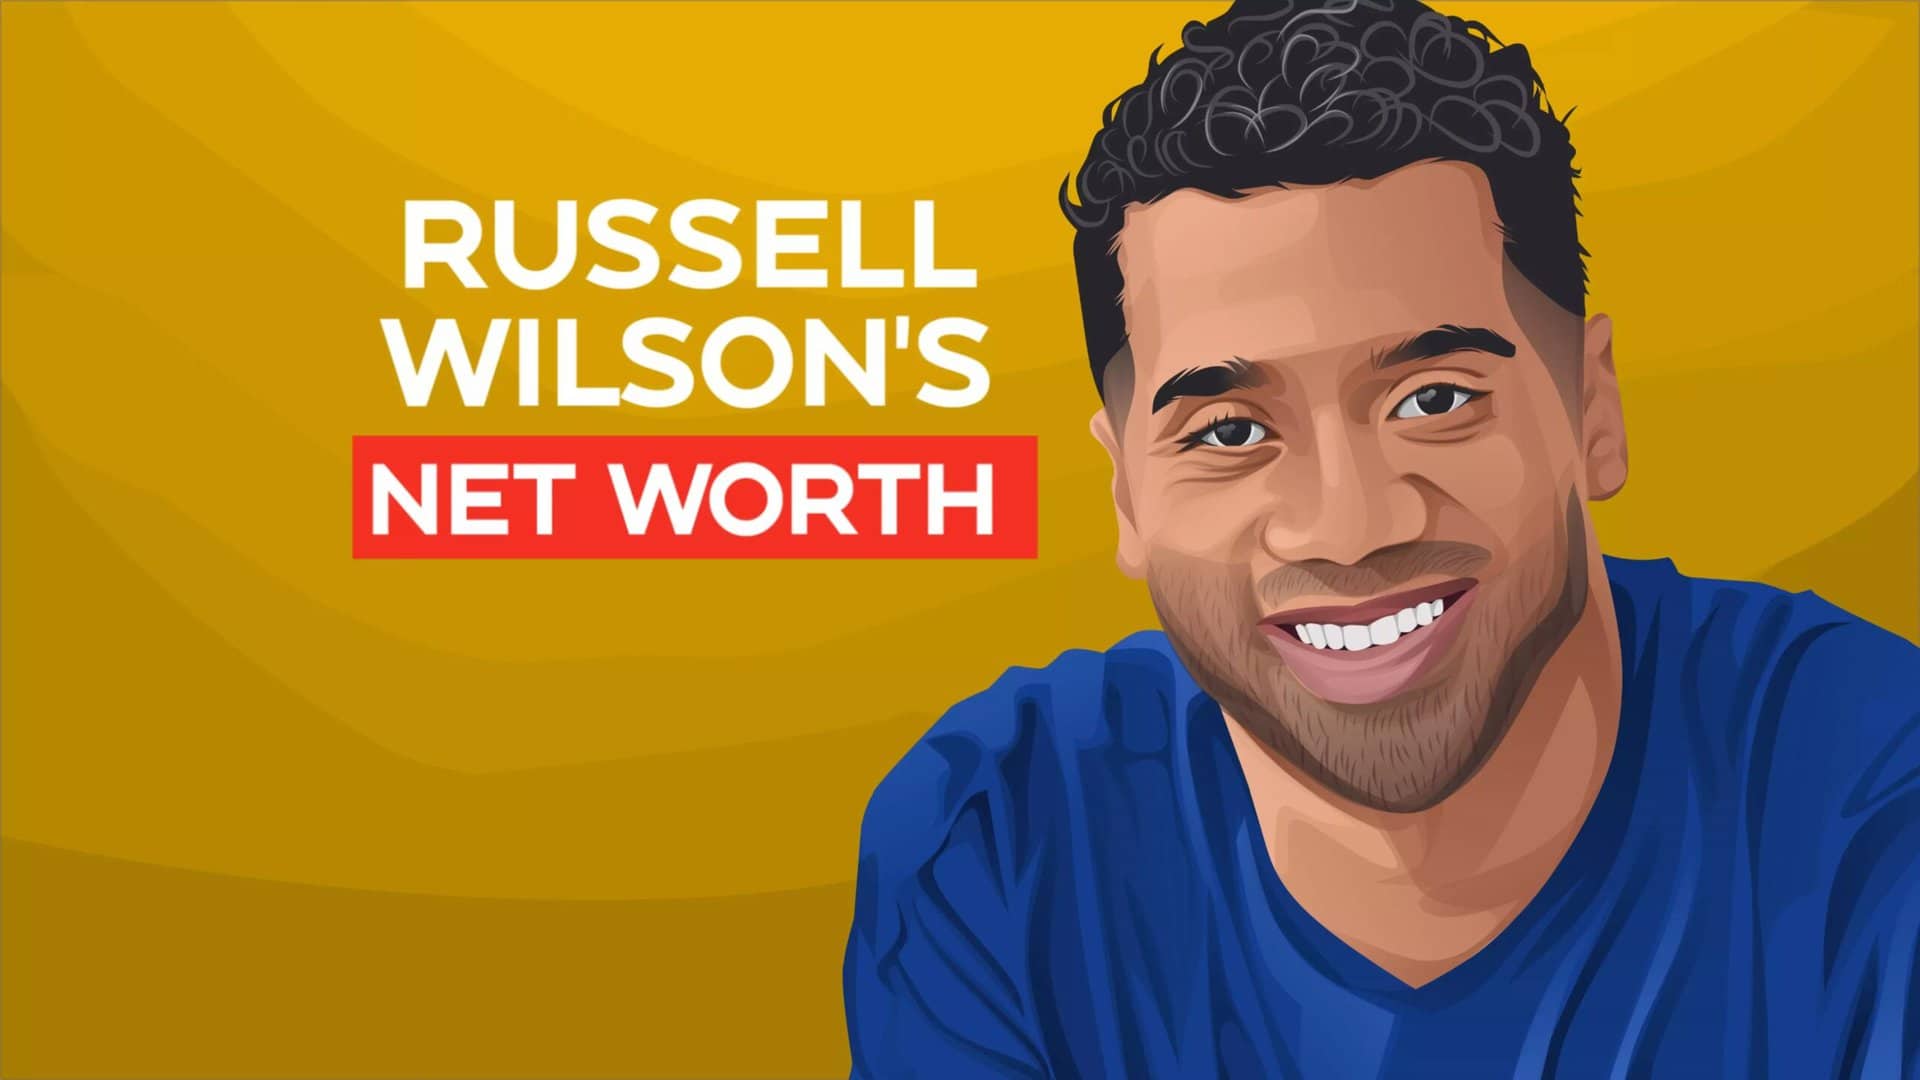 Russell Wilson's net worth